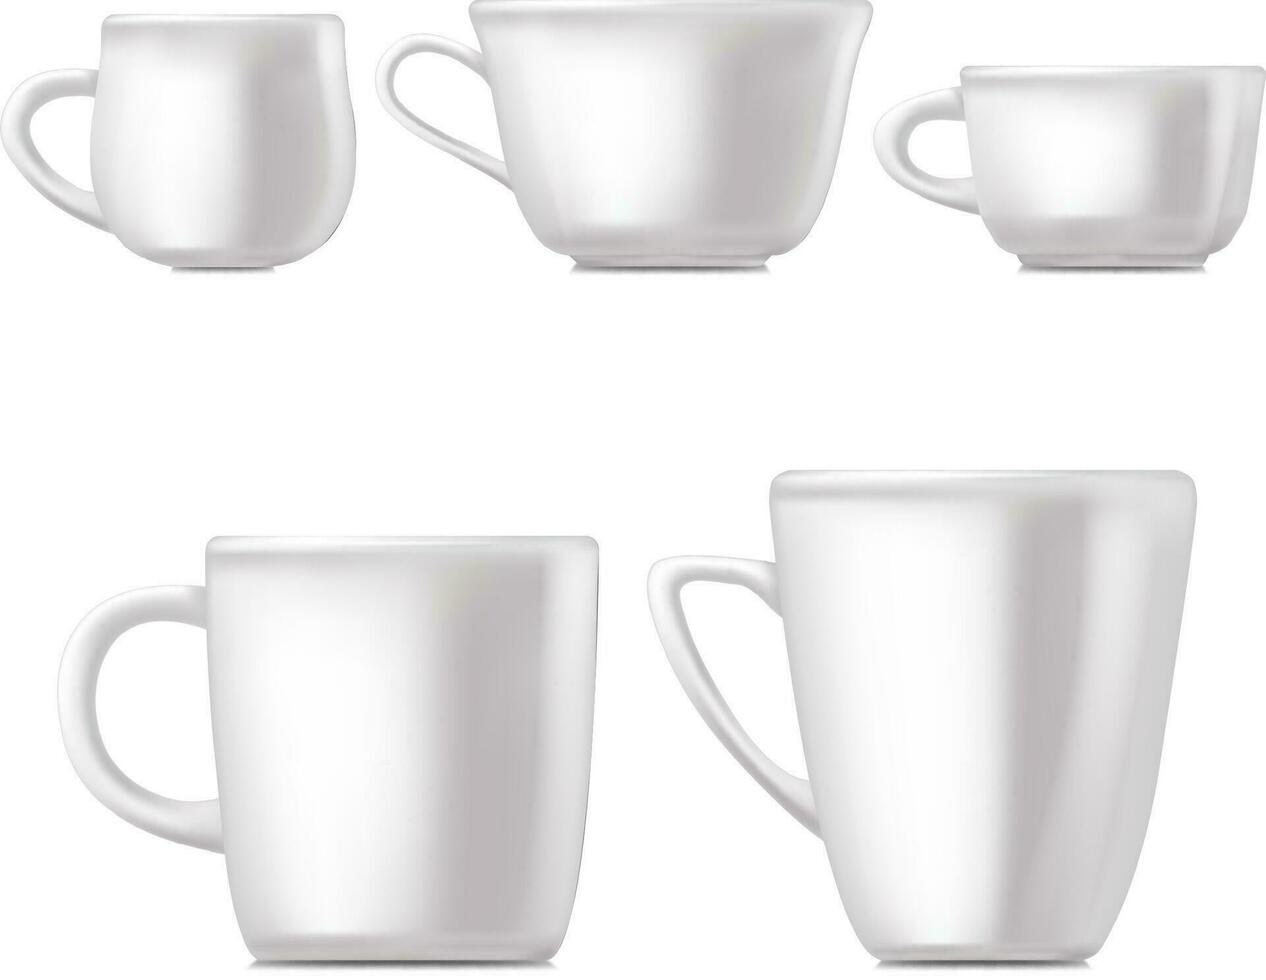 Realistic Detailed 3d Different White Ceramic Mug Set. Vector